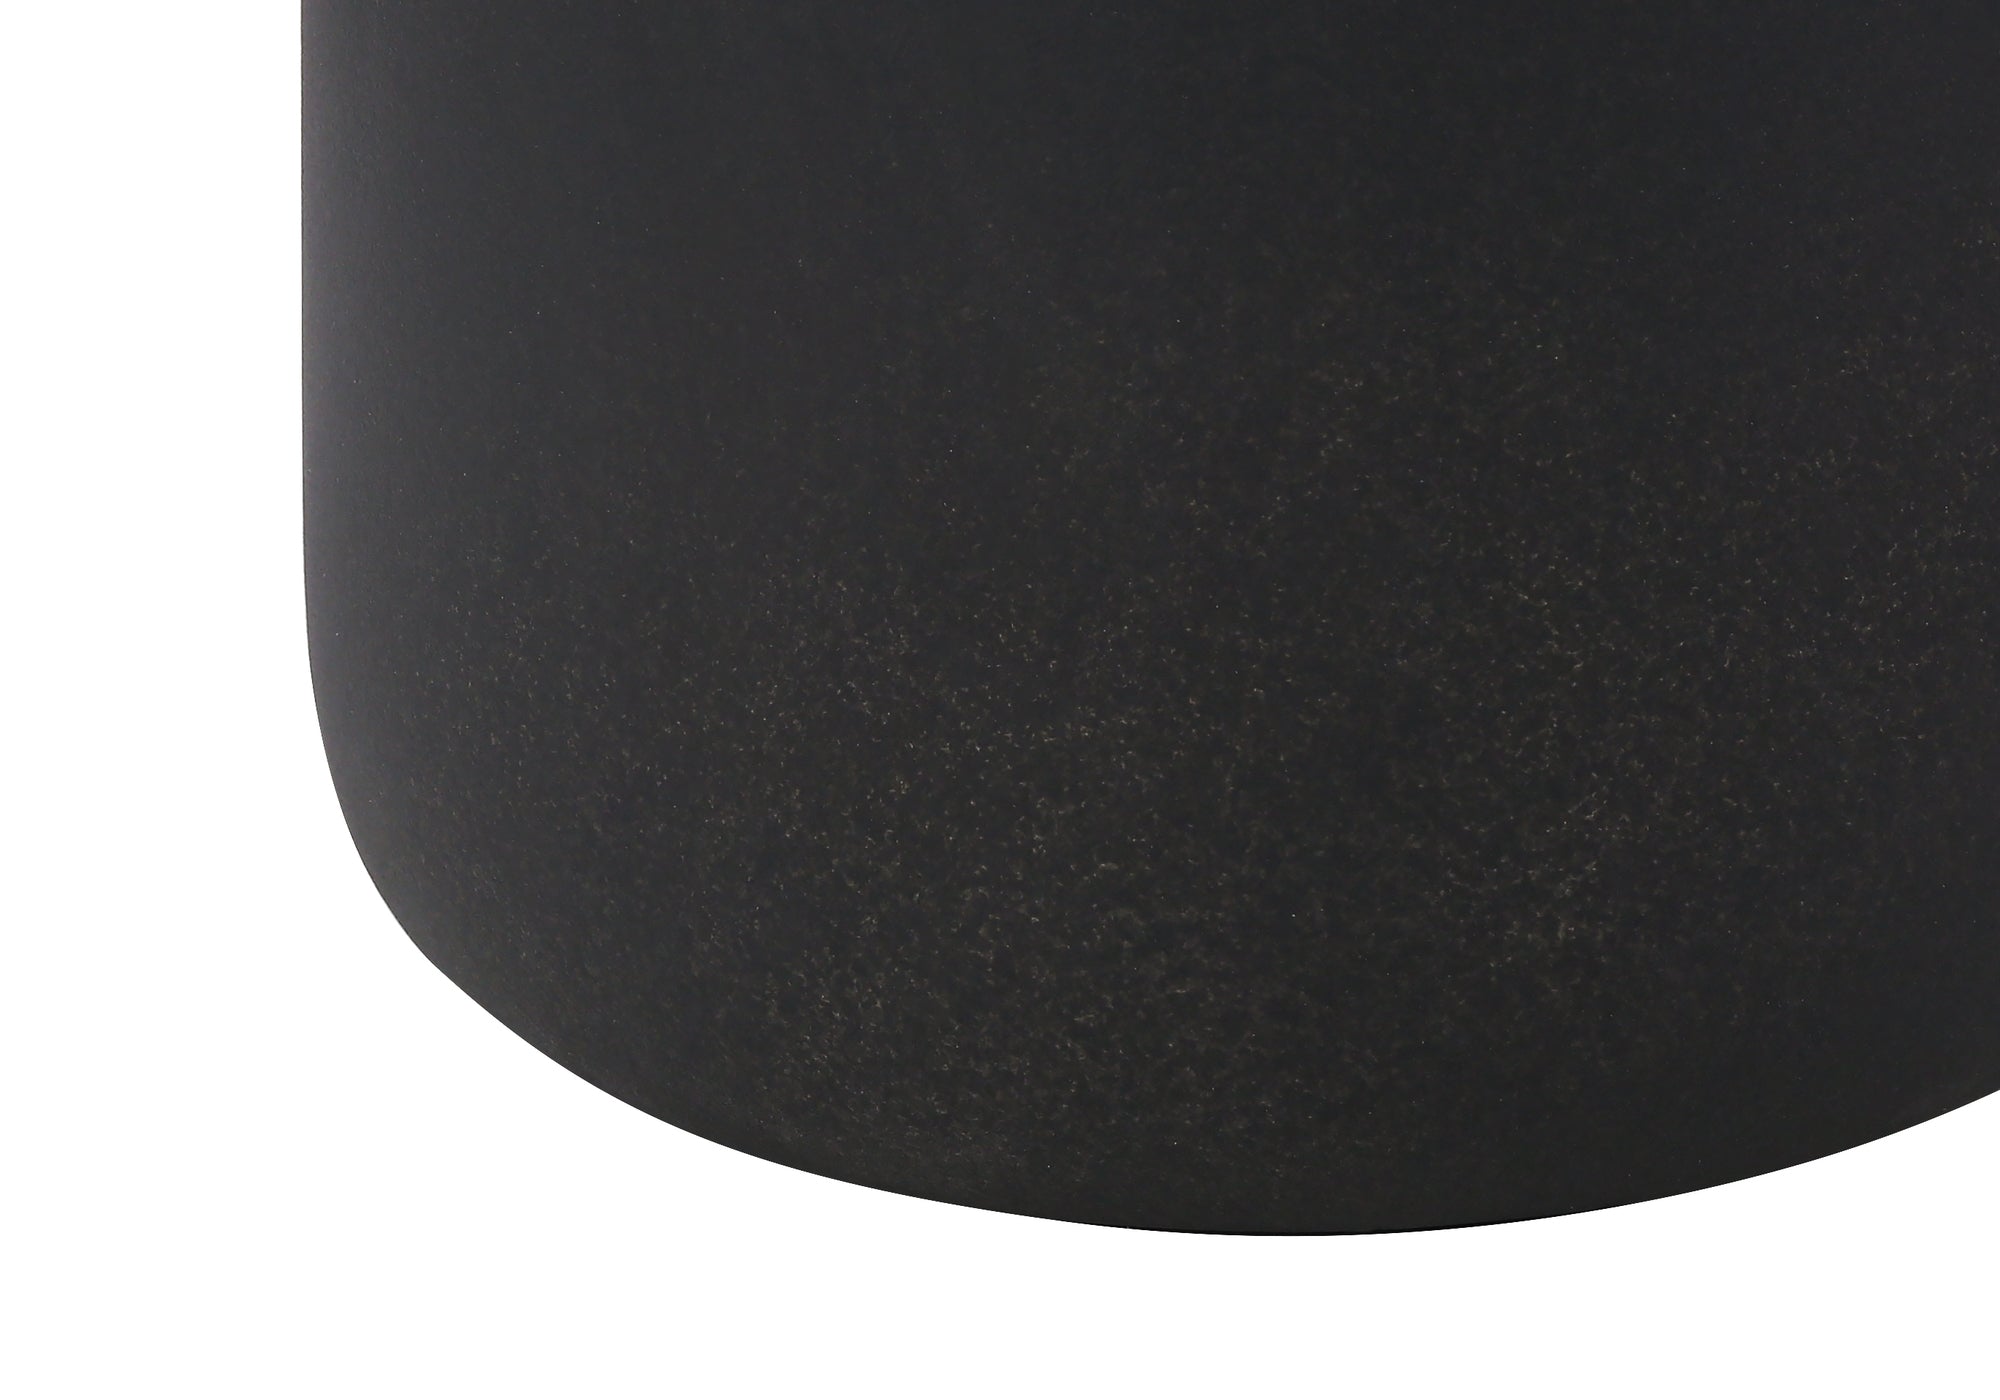 MN-169635    Lighting, 24"H, Table Lamp, Black Ceramic, Beige Shade, Contemporary